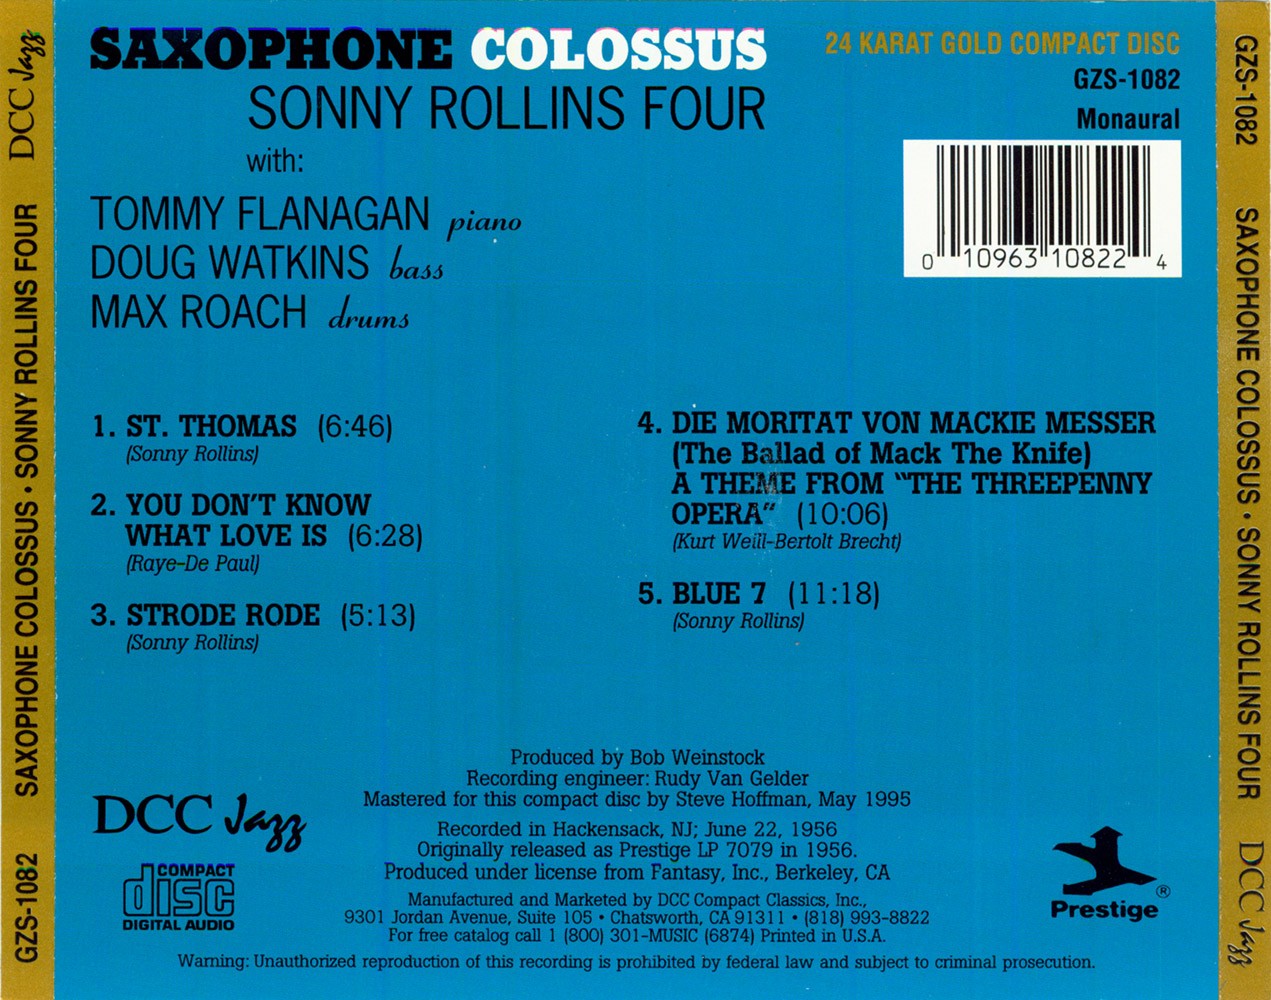 Saxophone Colossus [1986]